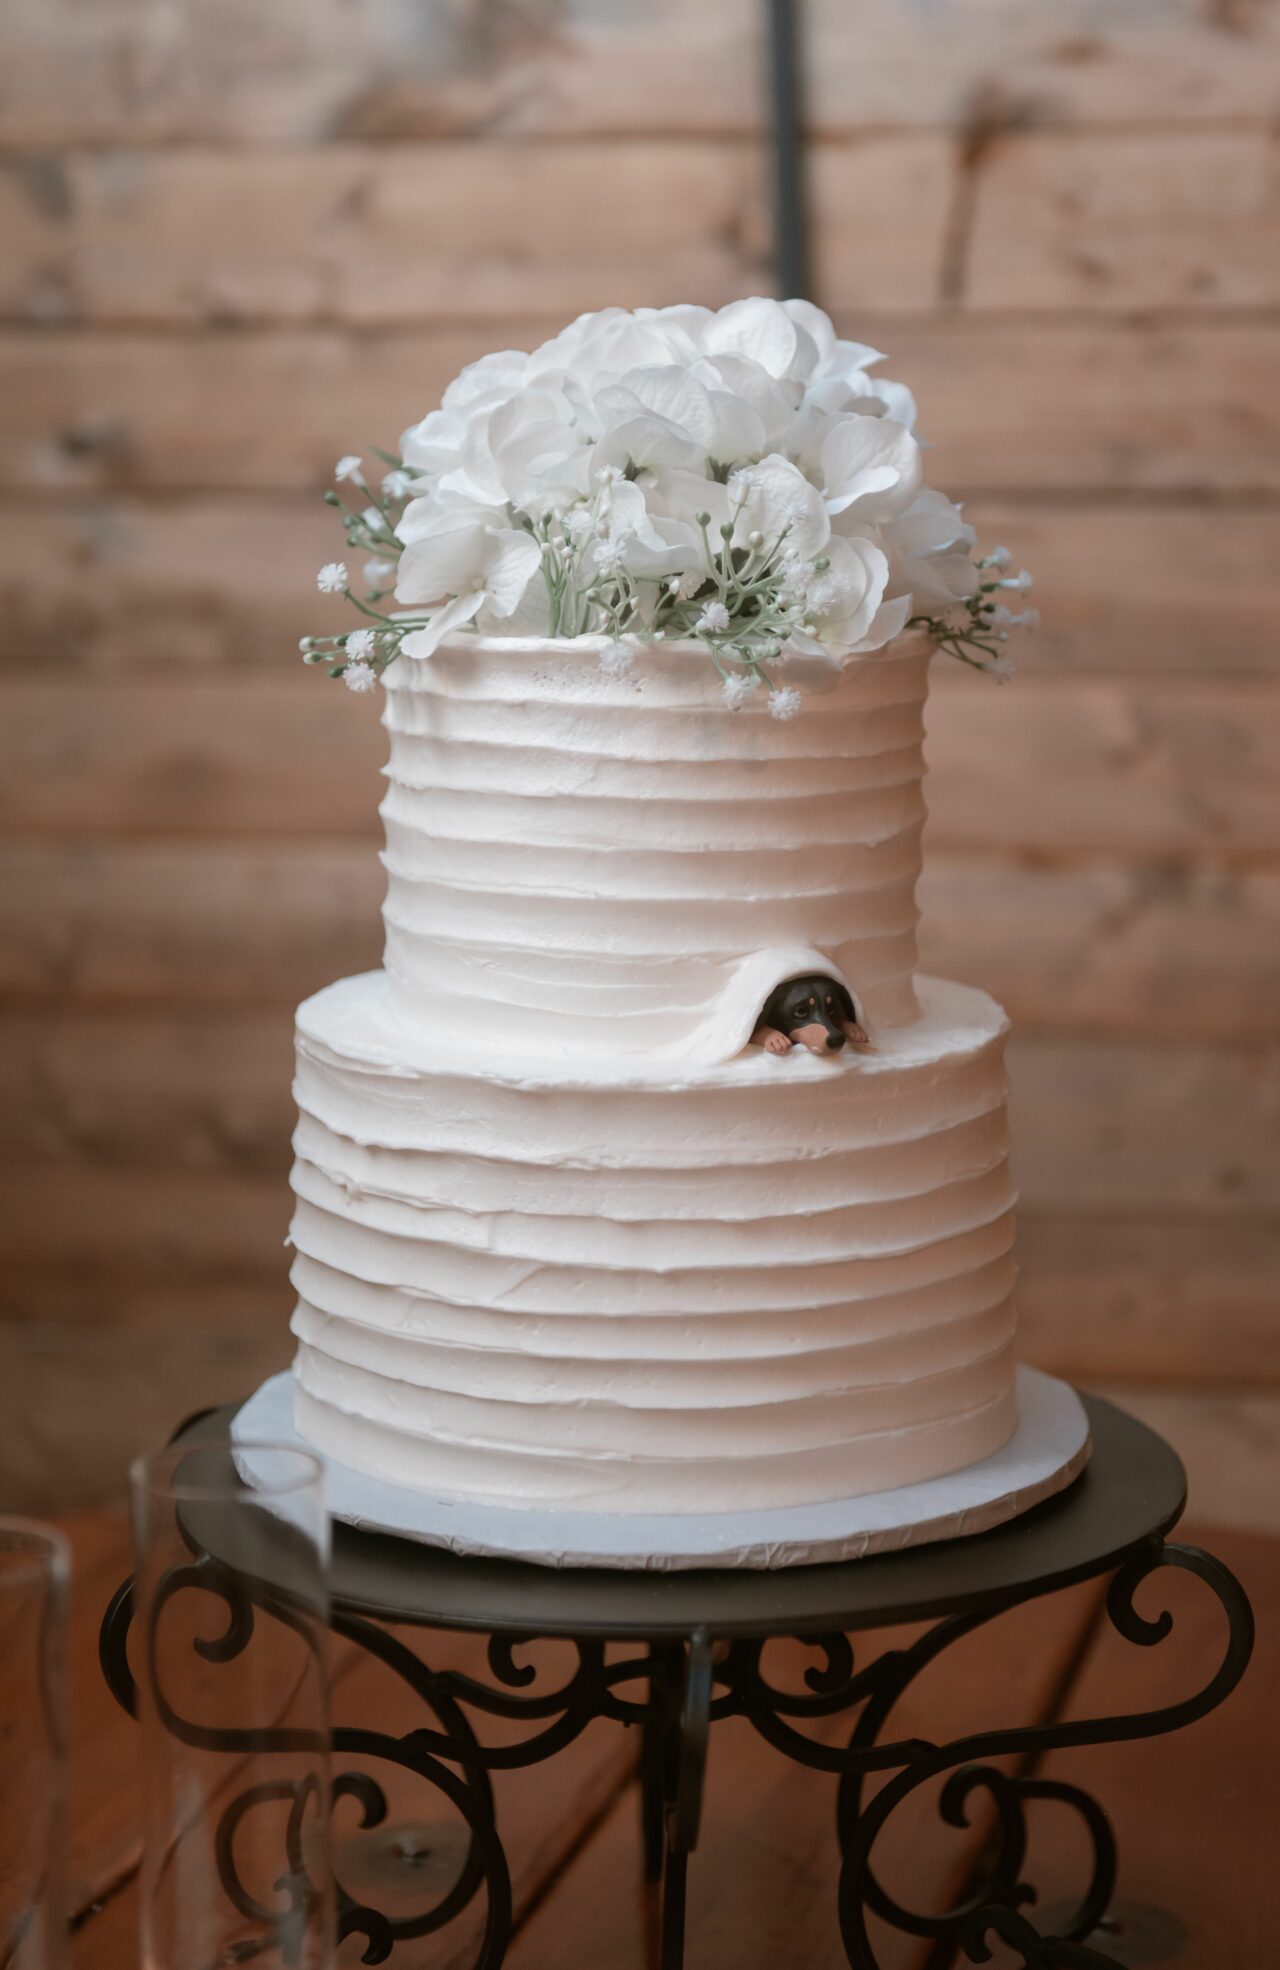 dog incorporated into wedding cake